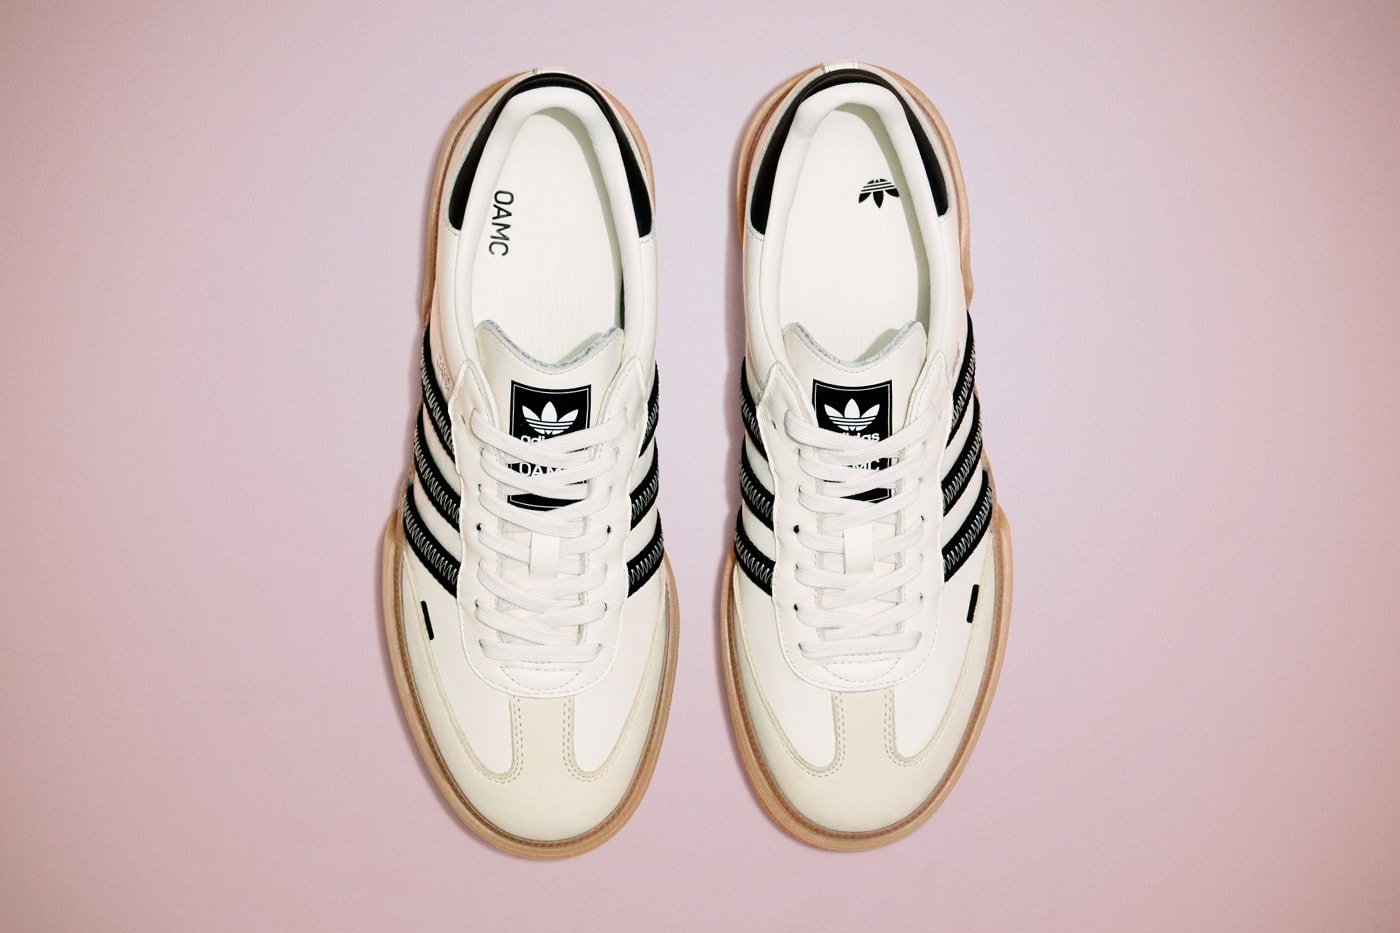 adidas Originals by OAMC Fall Winter 2020 collection menswear streetwear kicks shoes sneakers trainers runners footwear